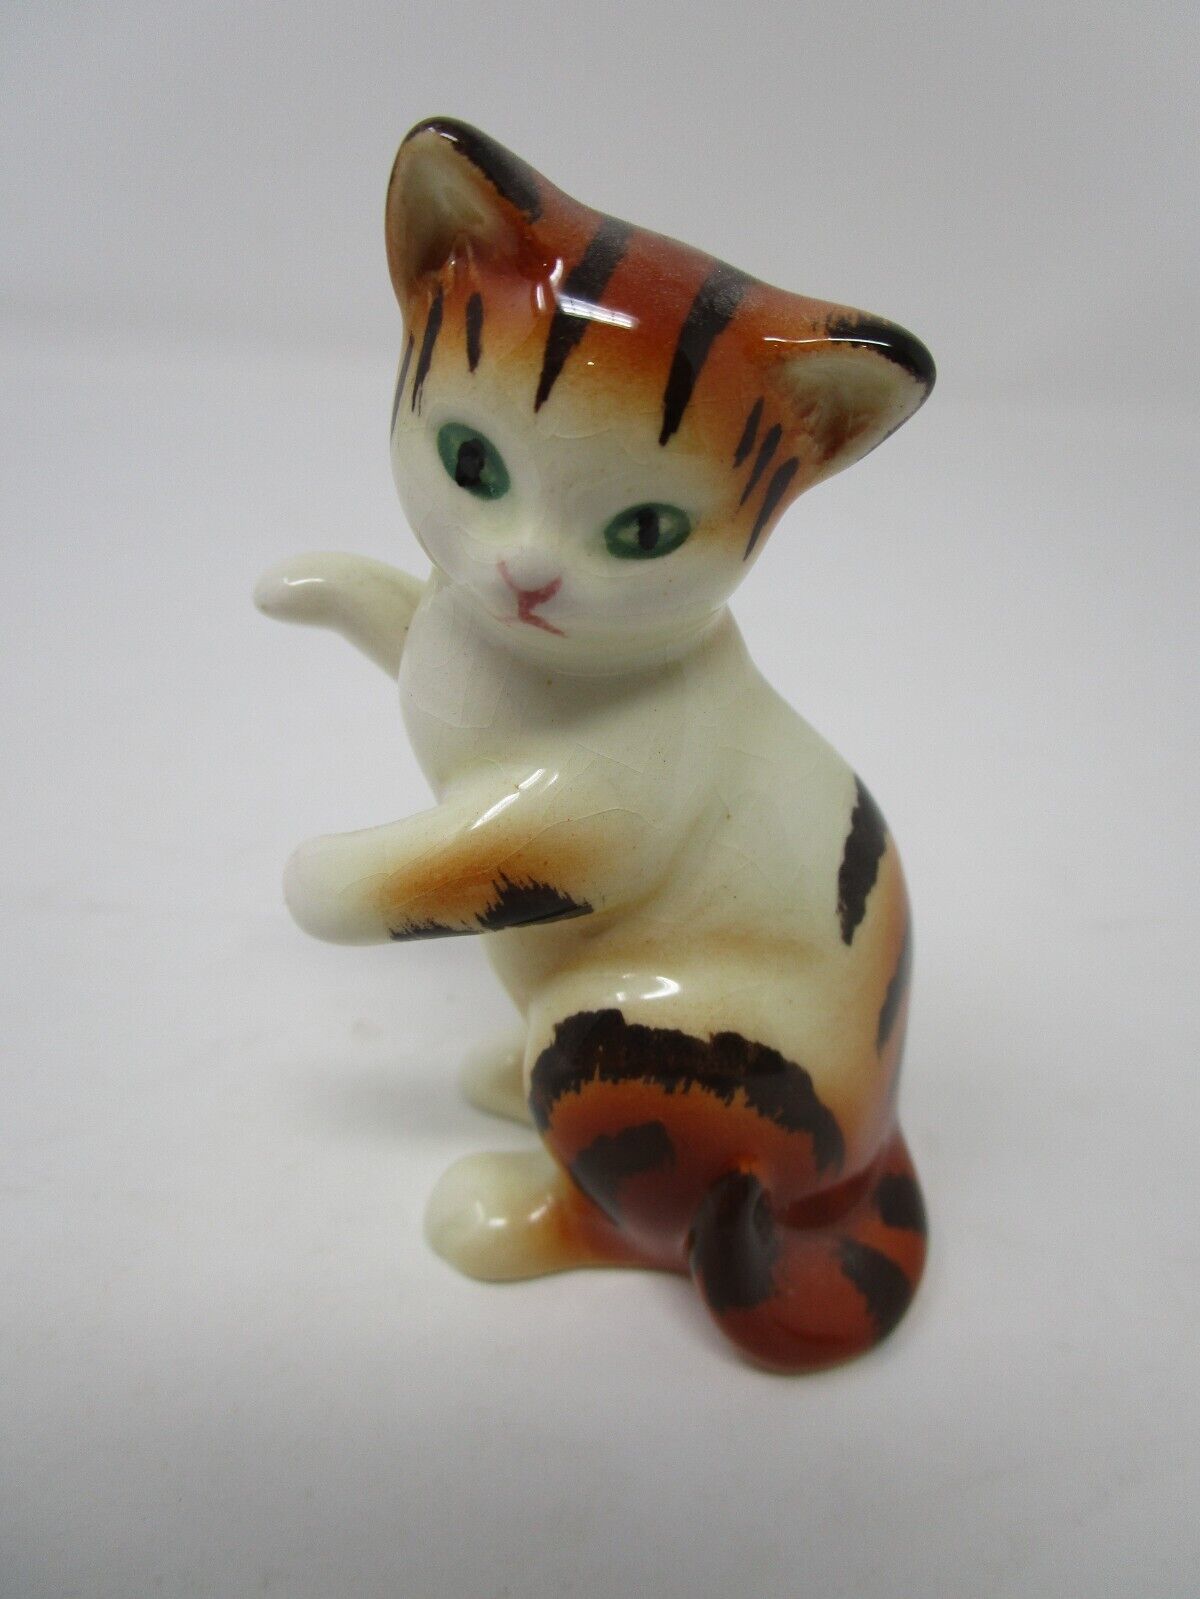 Vintage Goebel W Germany Small Orange Striped Tabby Cat with Green Eyes Figurine